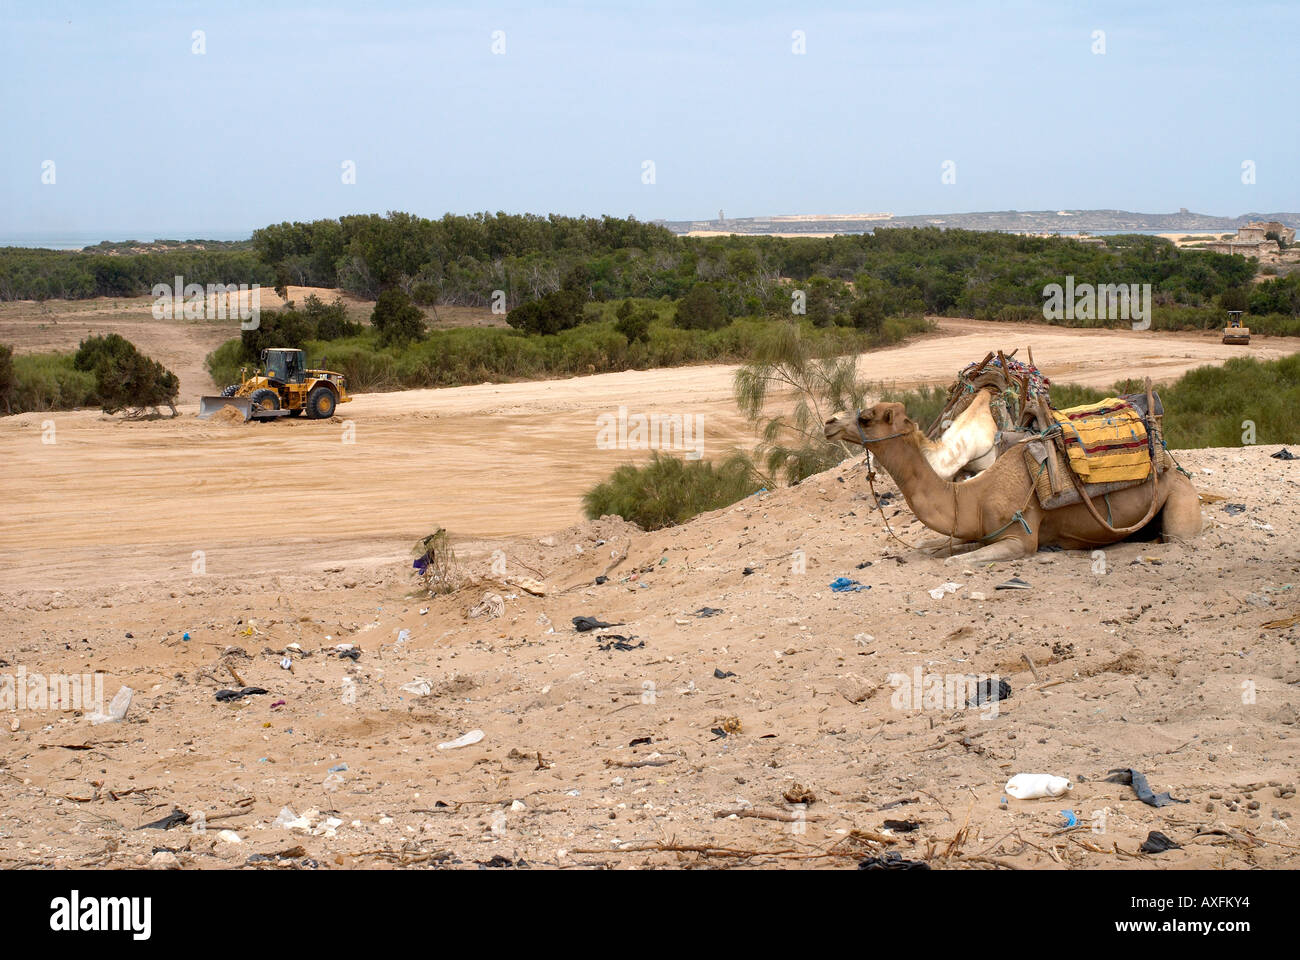 A camel surveys the relentless development of the Moroccan coastline and farmland Stock Photo